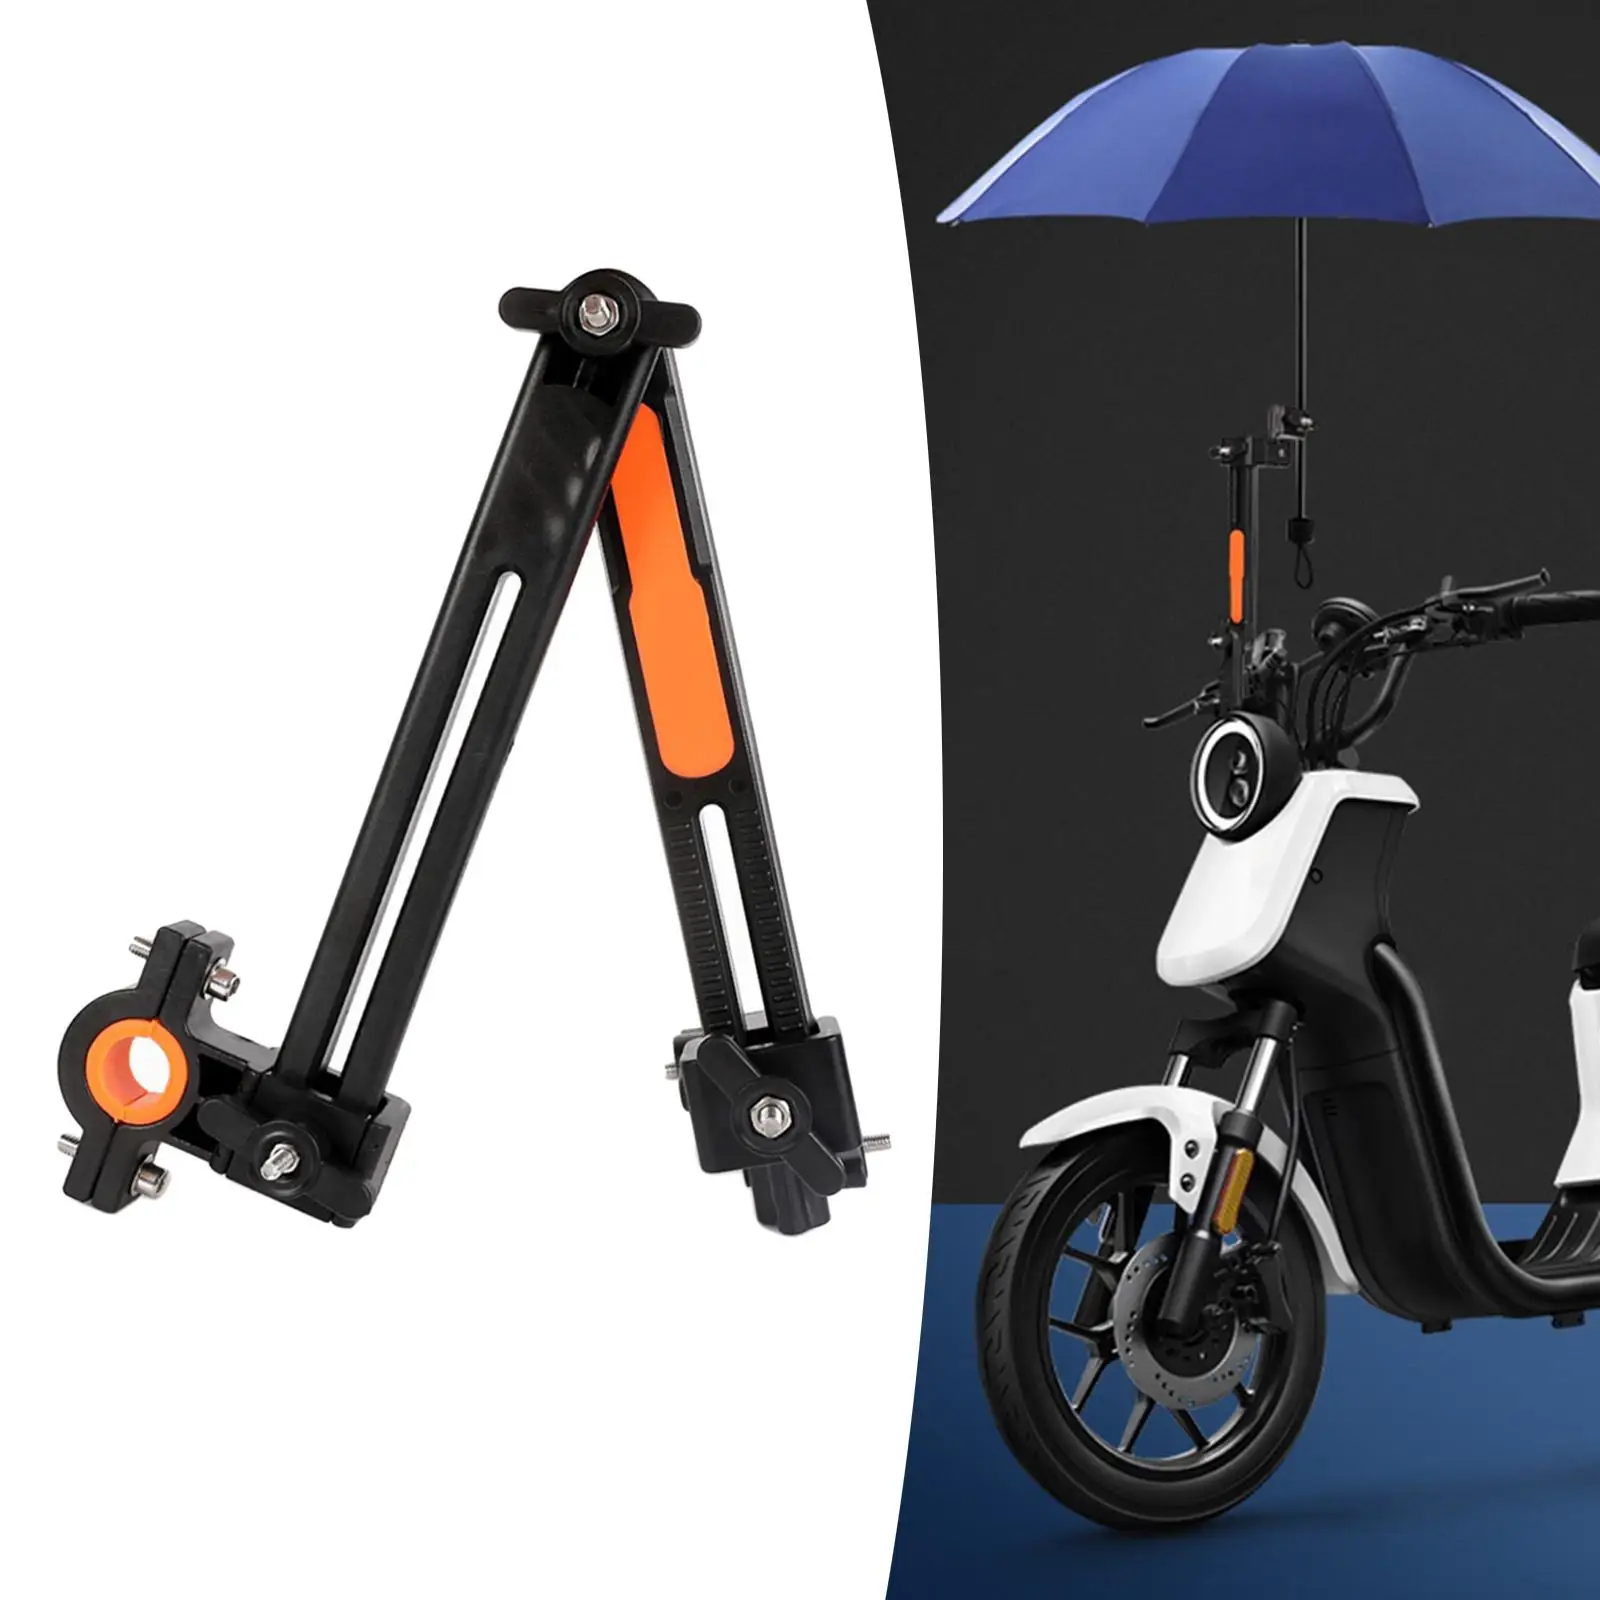 Umbrella Mount Holder Portable Accessories Bicycle Umbrella stand Beach Chair